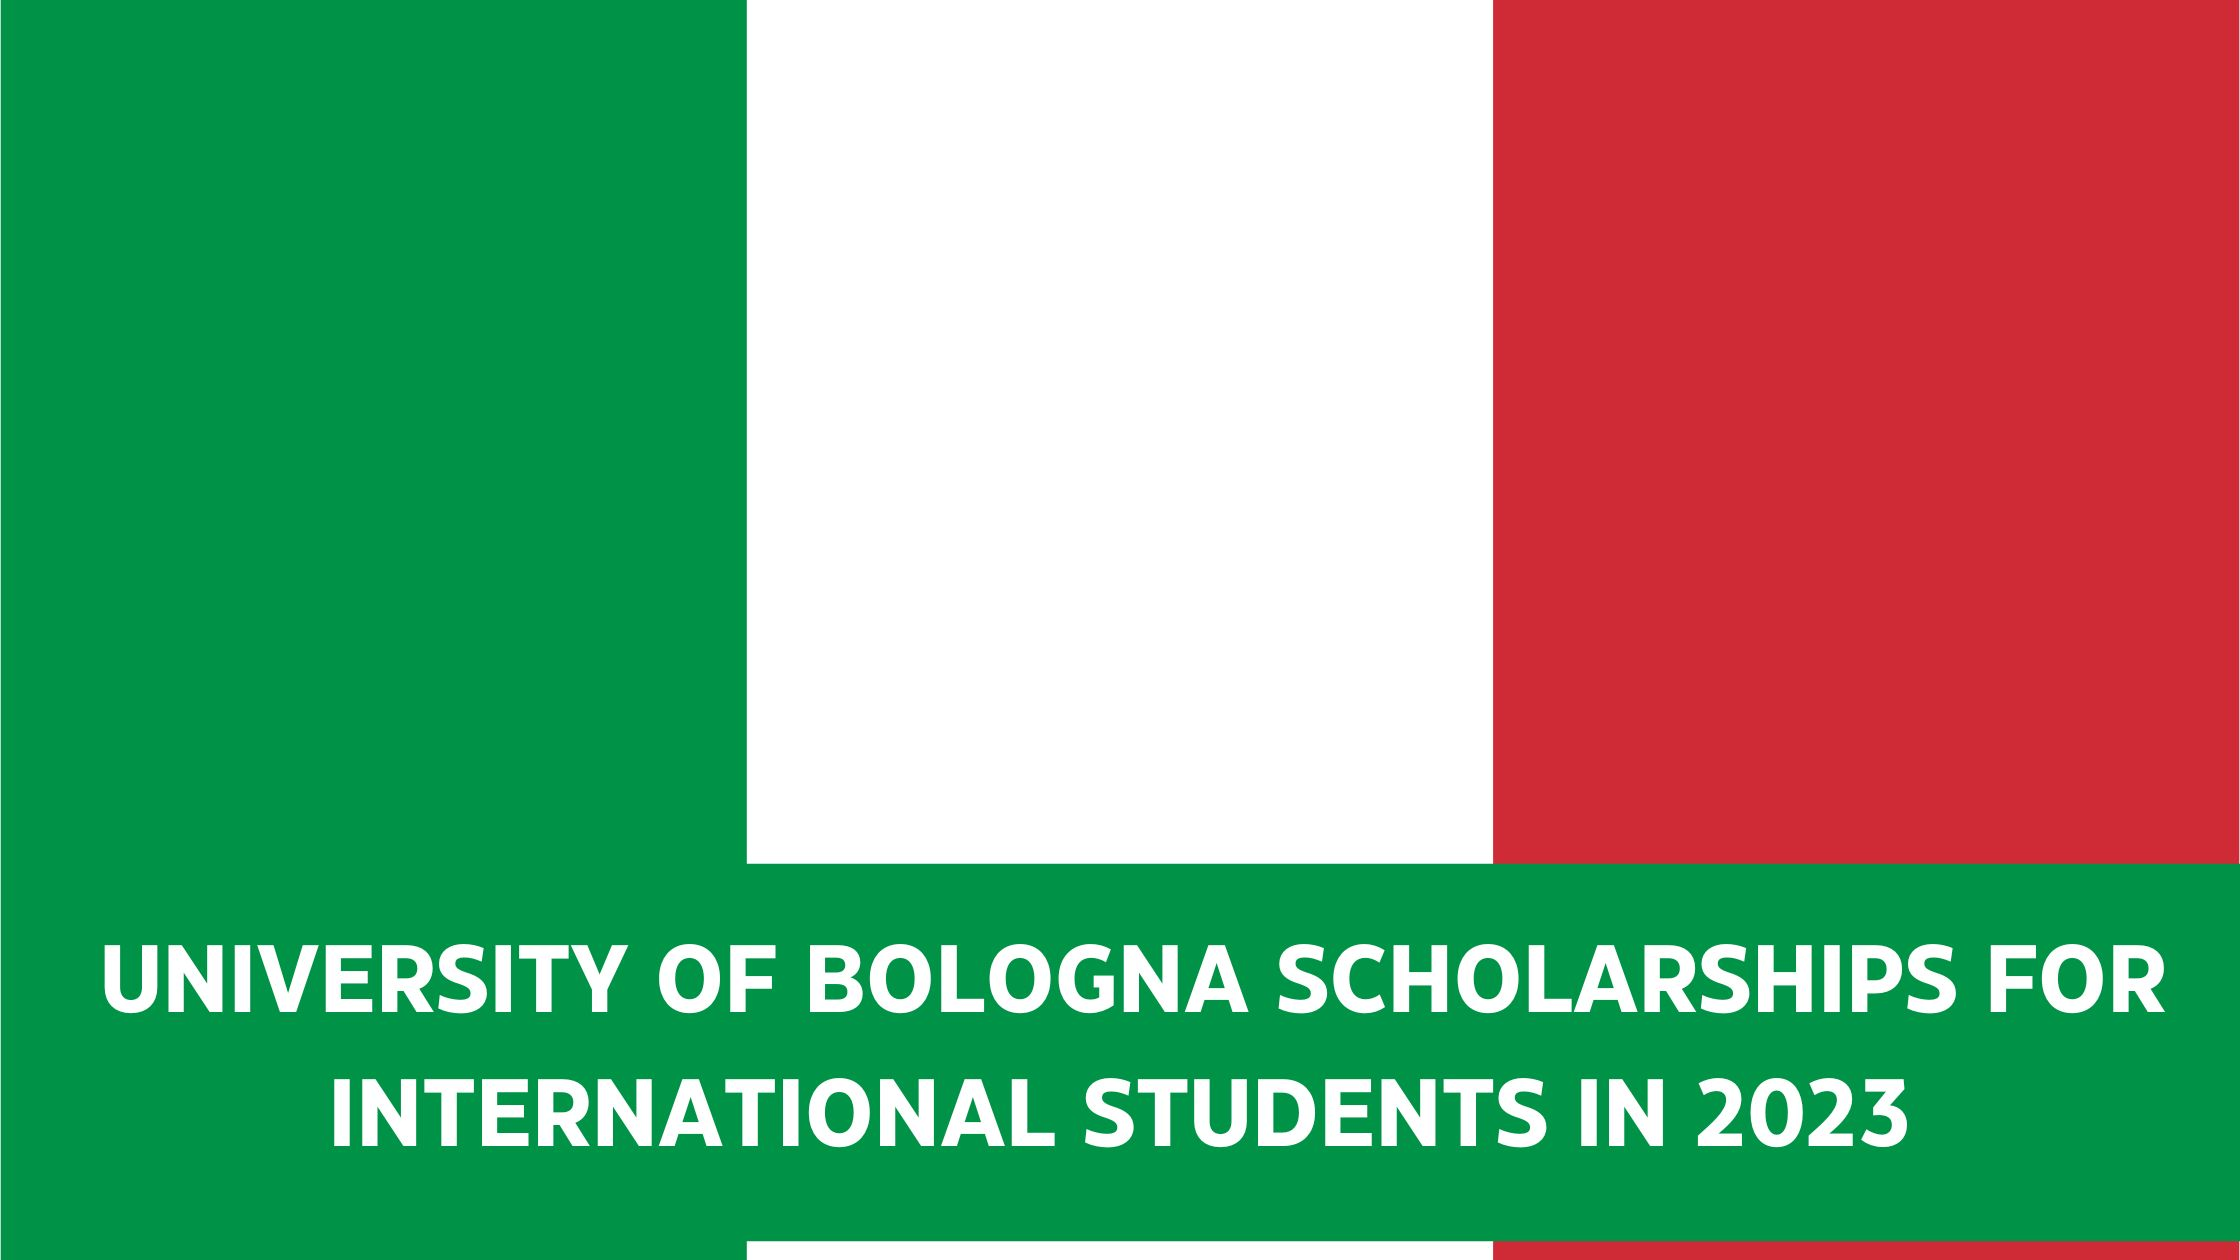 UNIVERSITY OF BOLOGNA SCHOLARSHIPS FOR INTERNATIONAL STUDENTS IN 2023